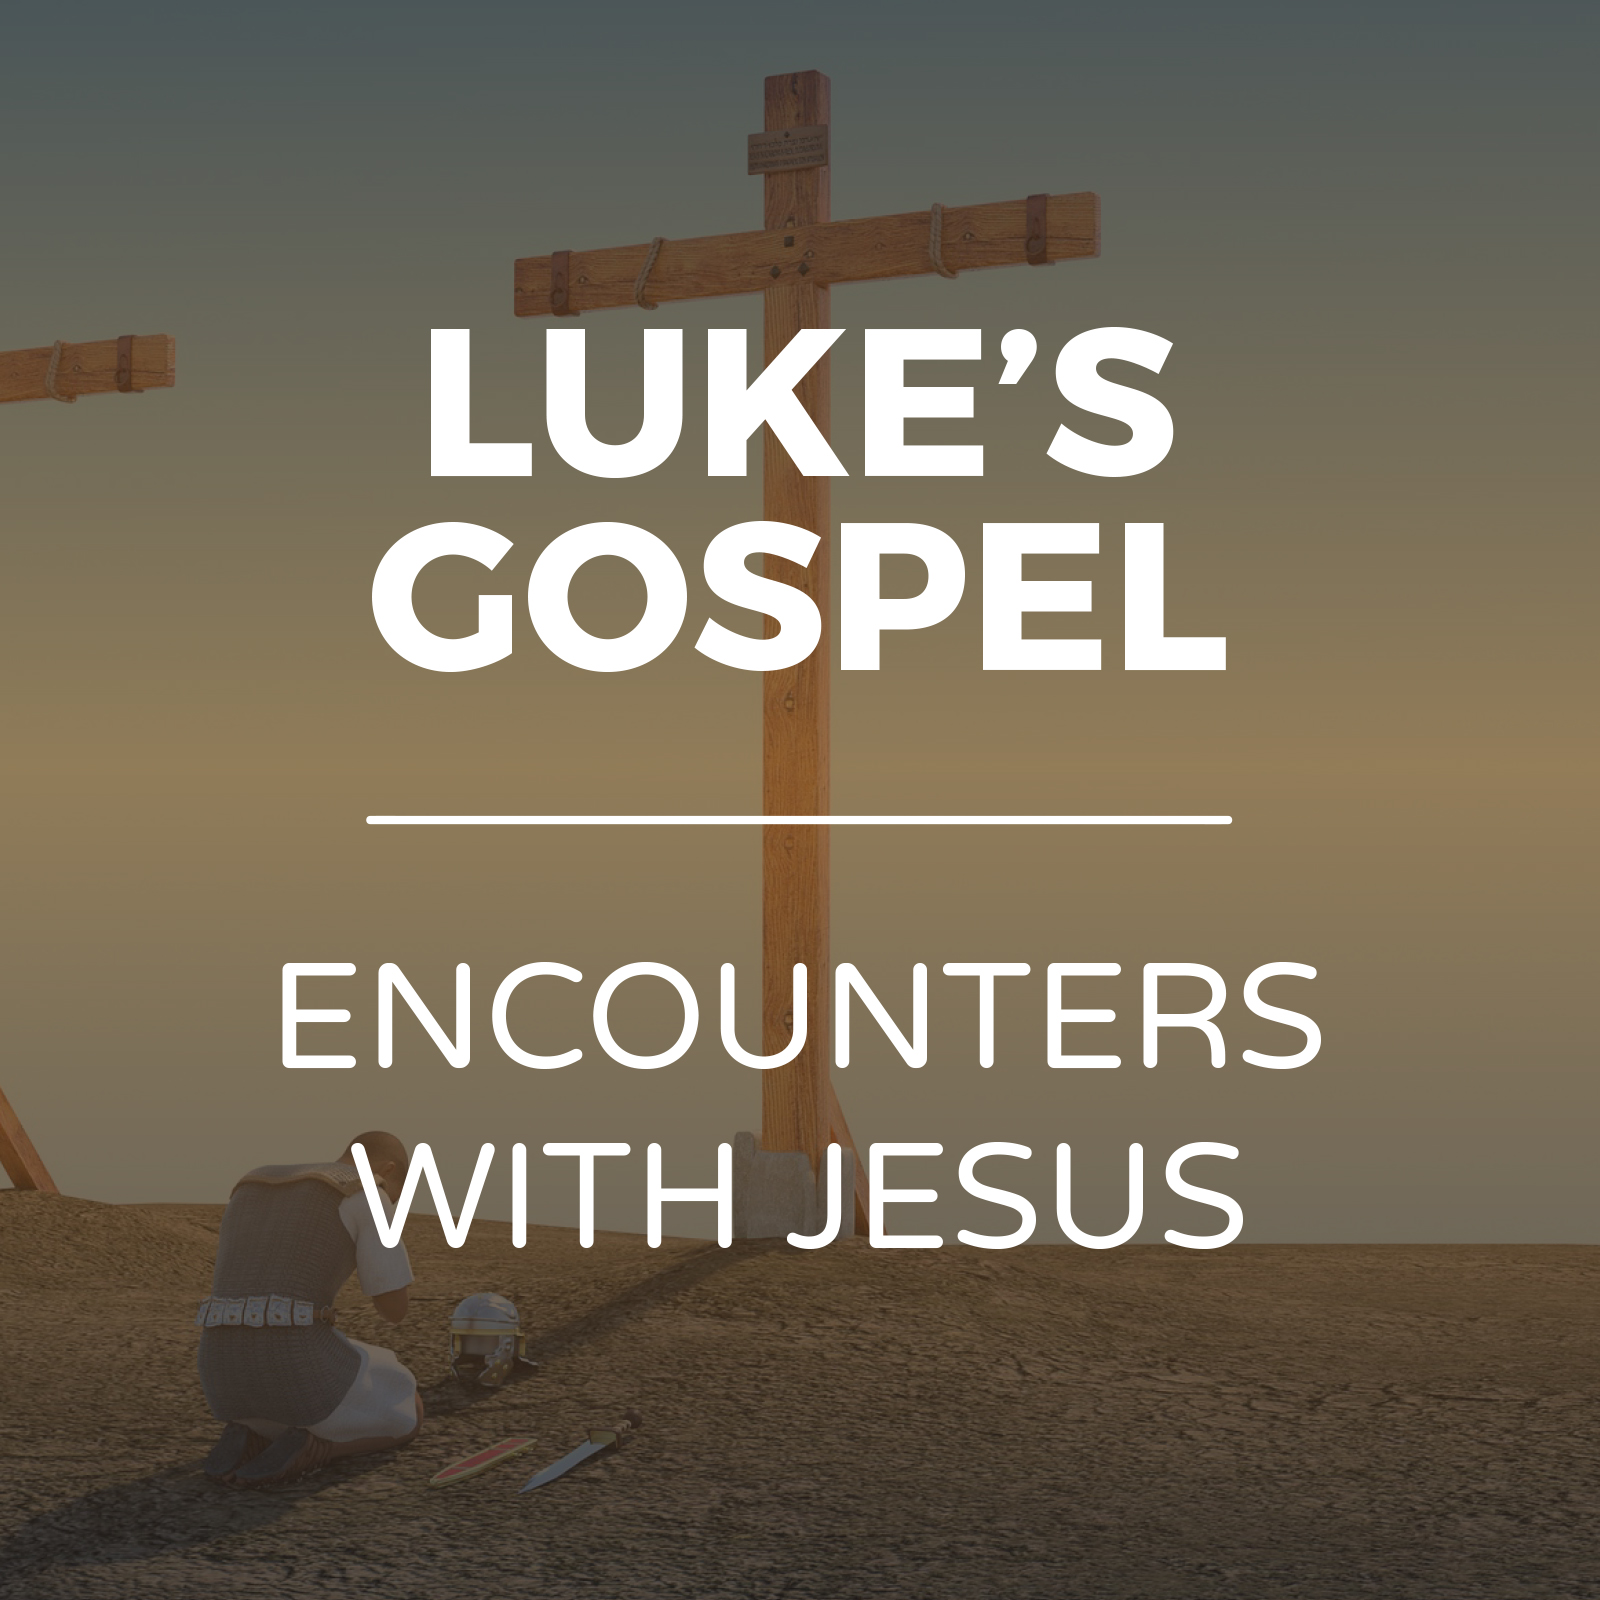 Lukes Gospel - Encounters With Jesus Sermon Series - Hope Church Huddersfield